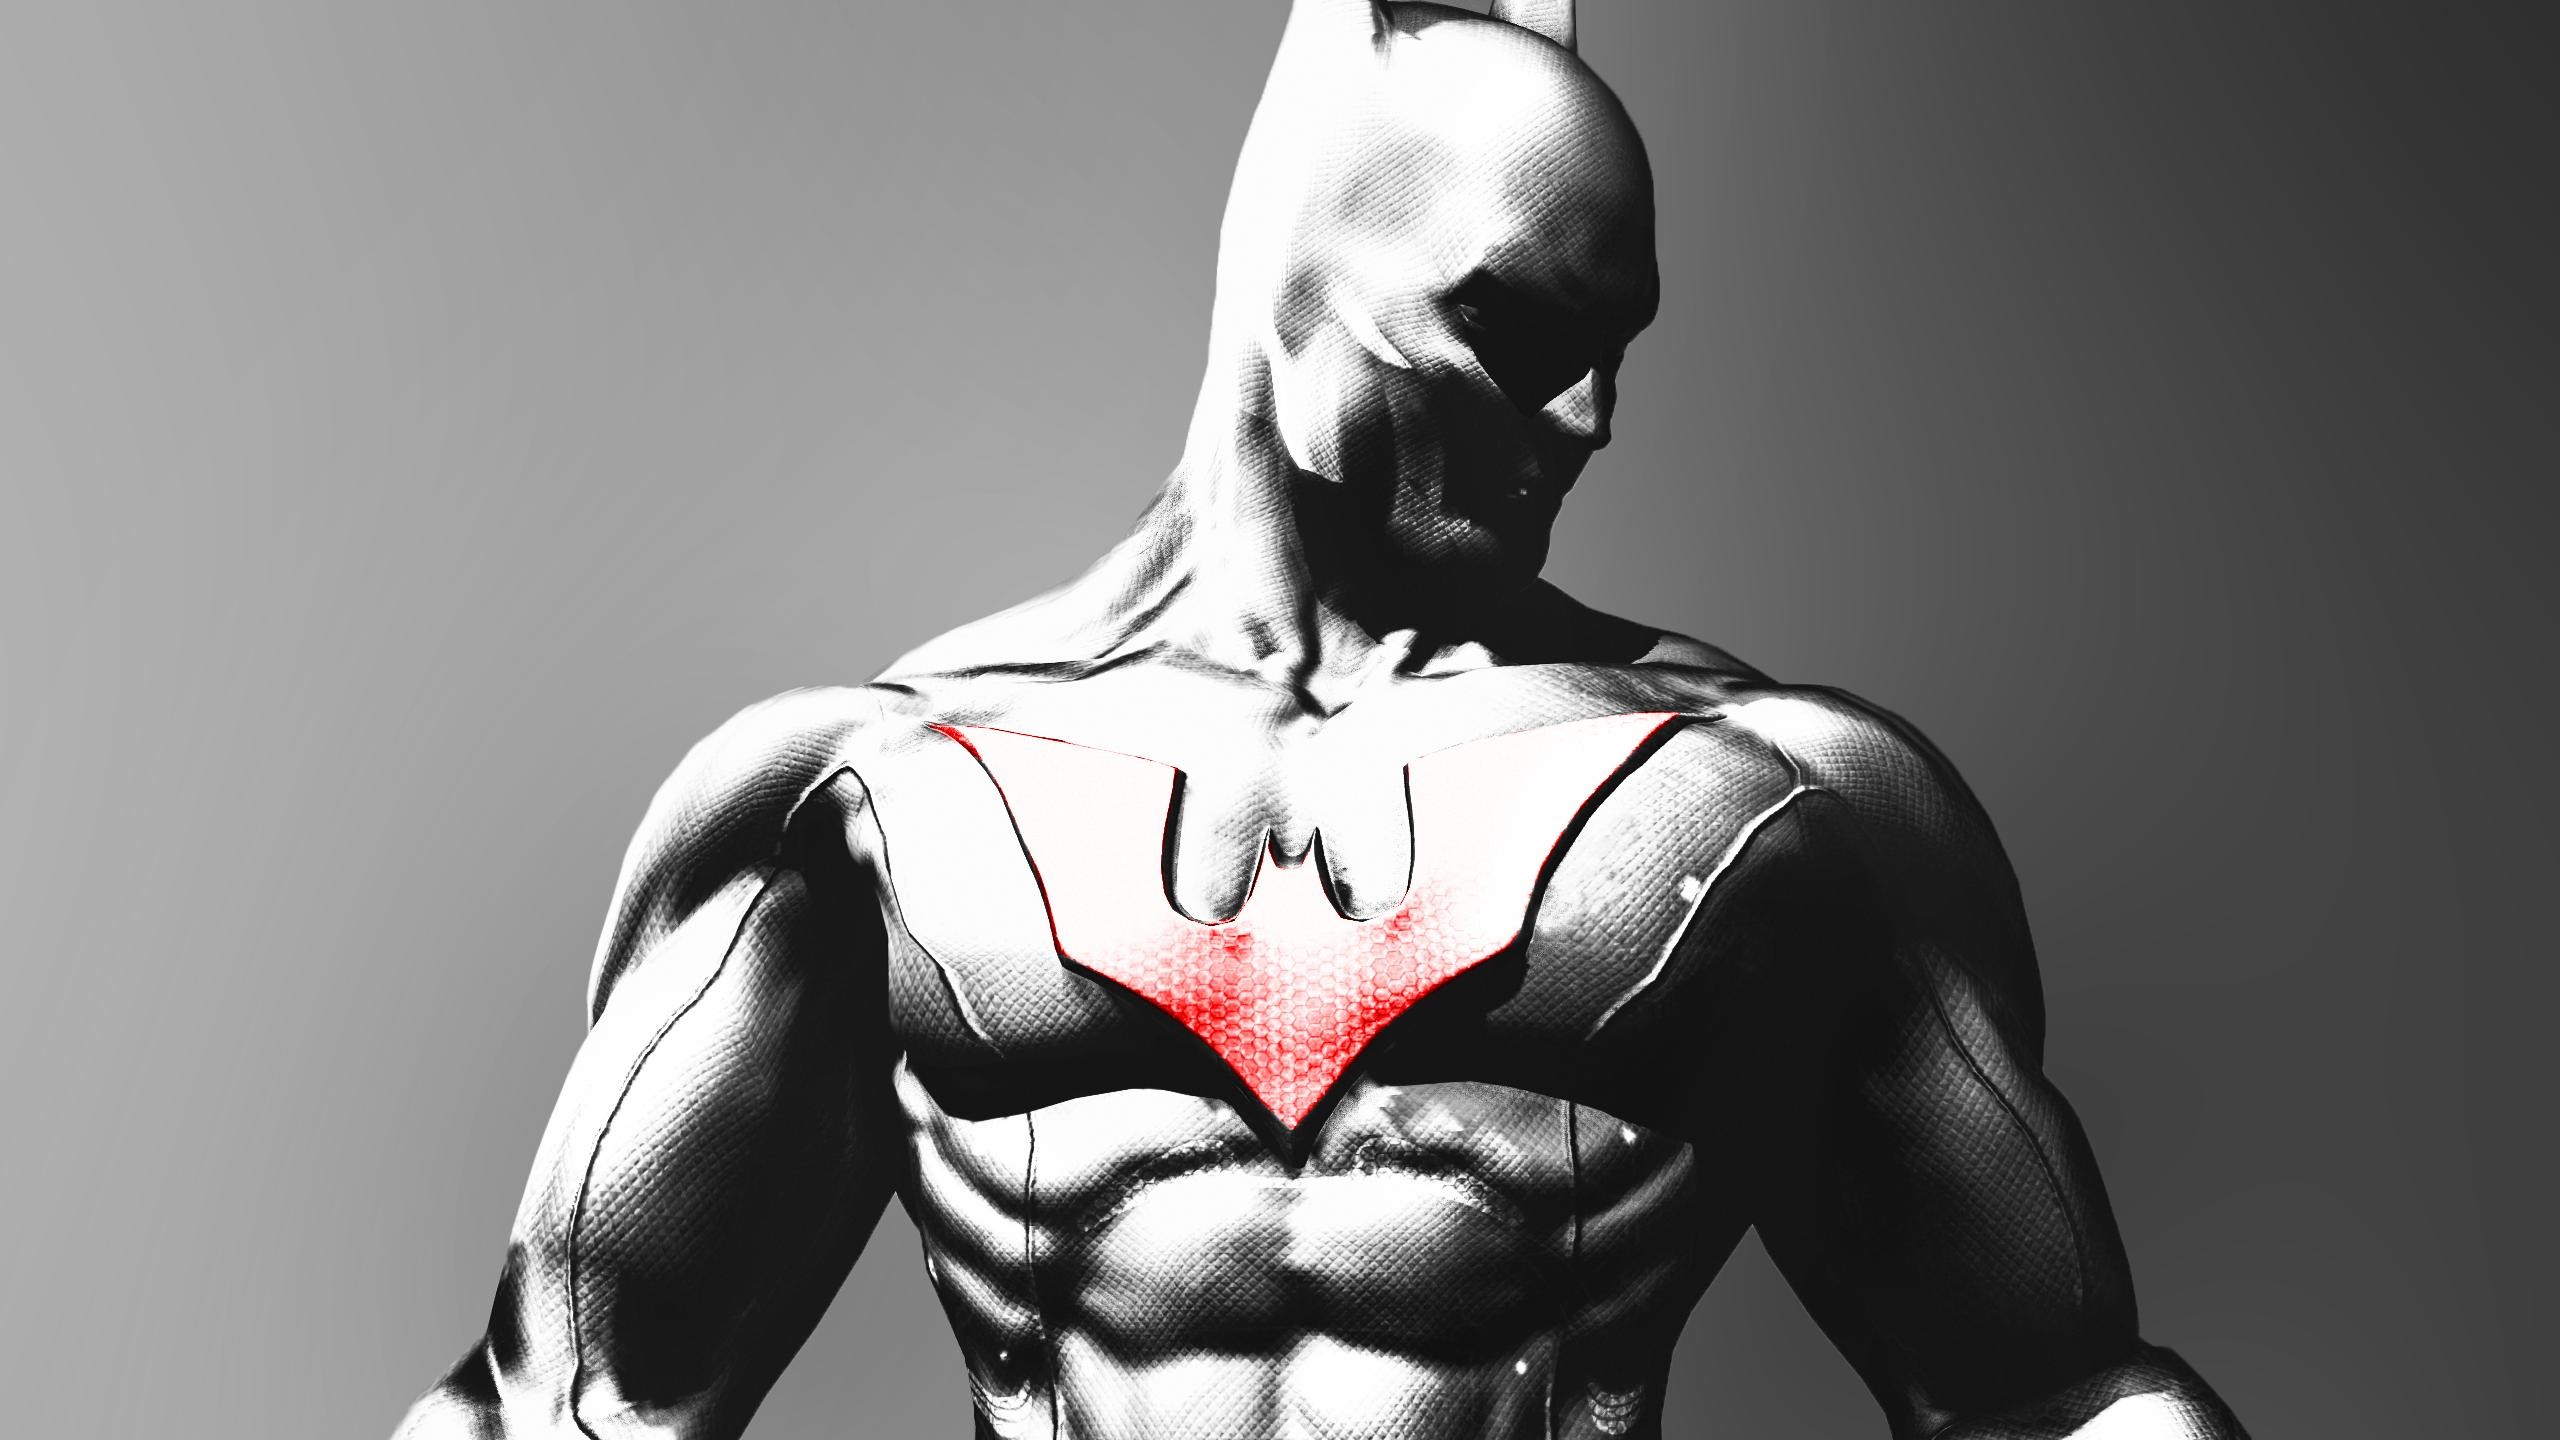 Wallpaper, monochrome, Batman Arkham City, superhero, Batman Beyond, muscle, arm, chest, black and white, human body, fictional character 2560x1440